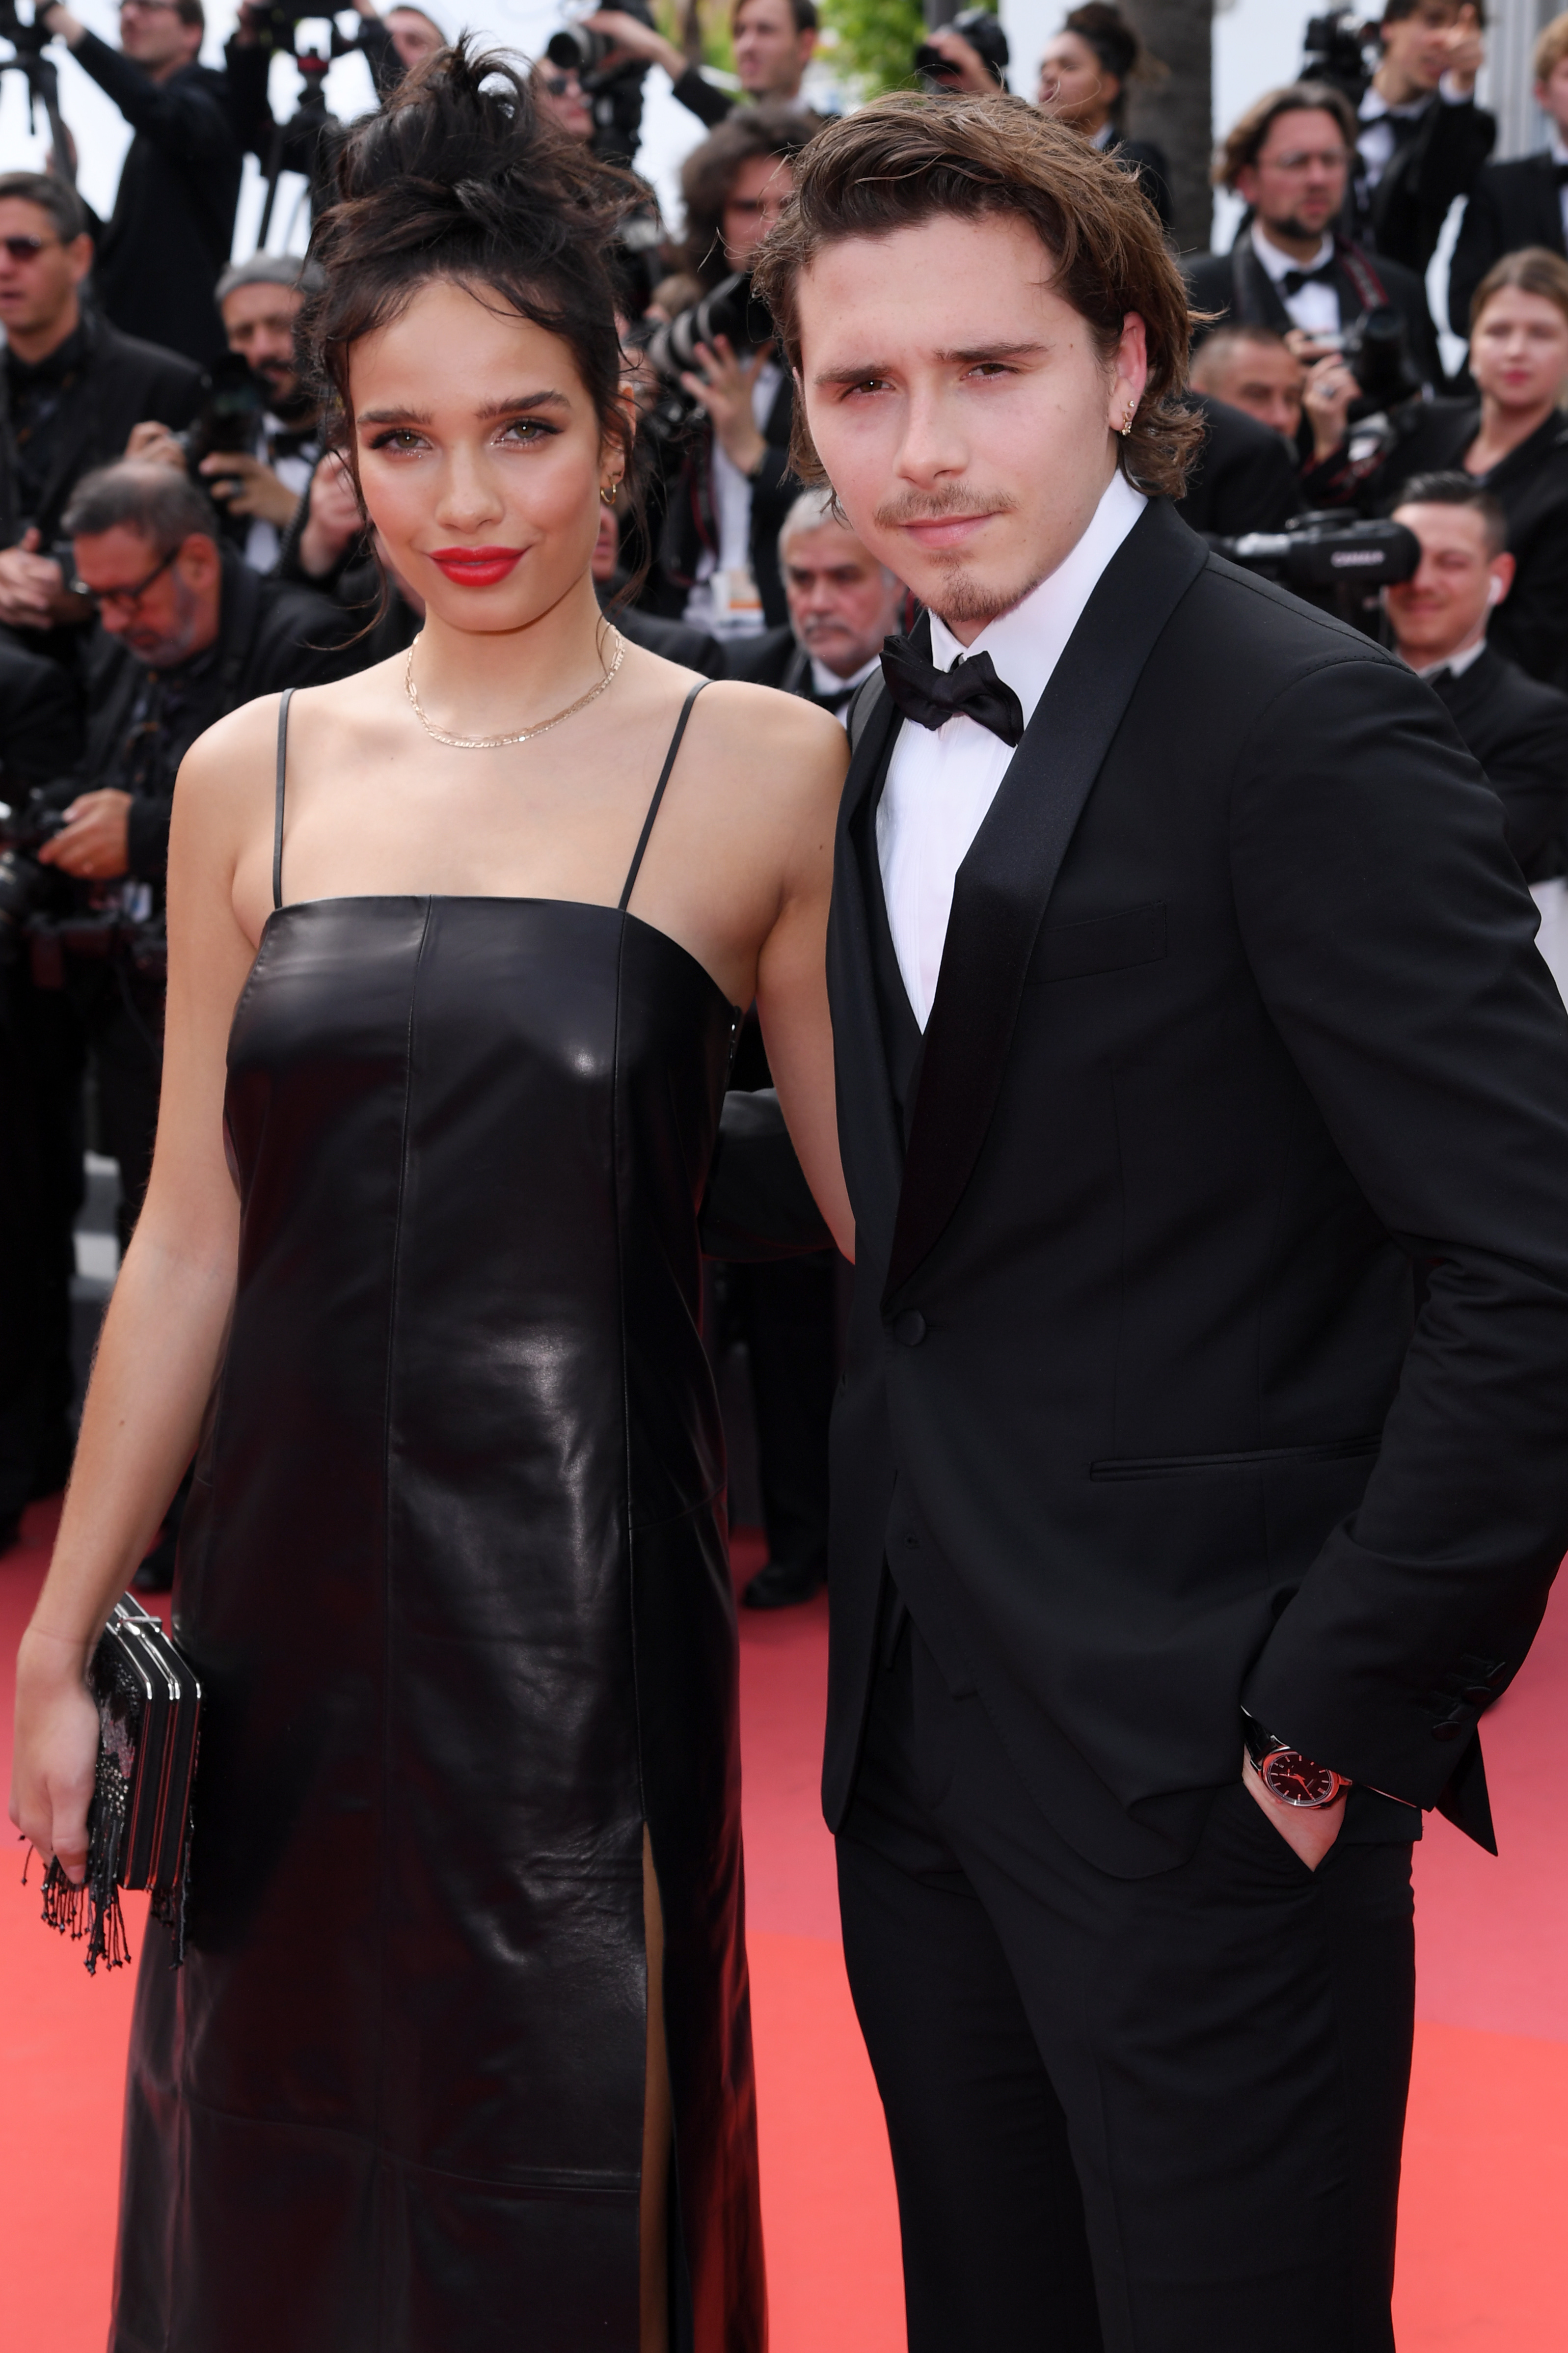 Brooklyn Beckham poses with wife Nicola Peltz at Met Gala in  ex-girlfriend's presence